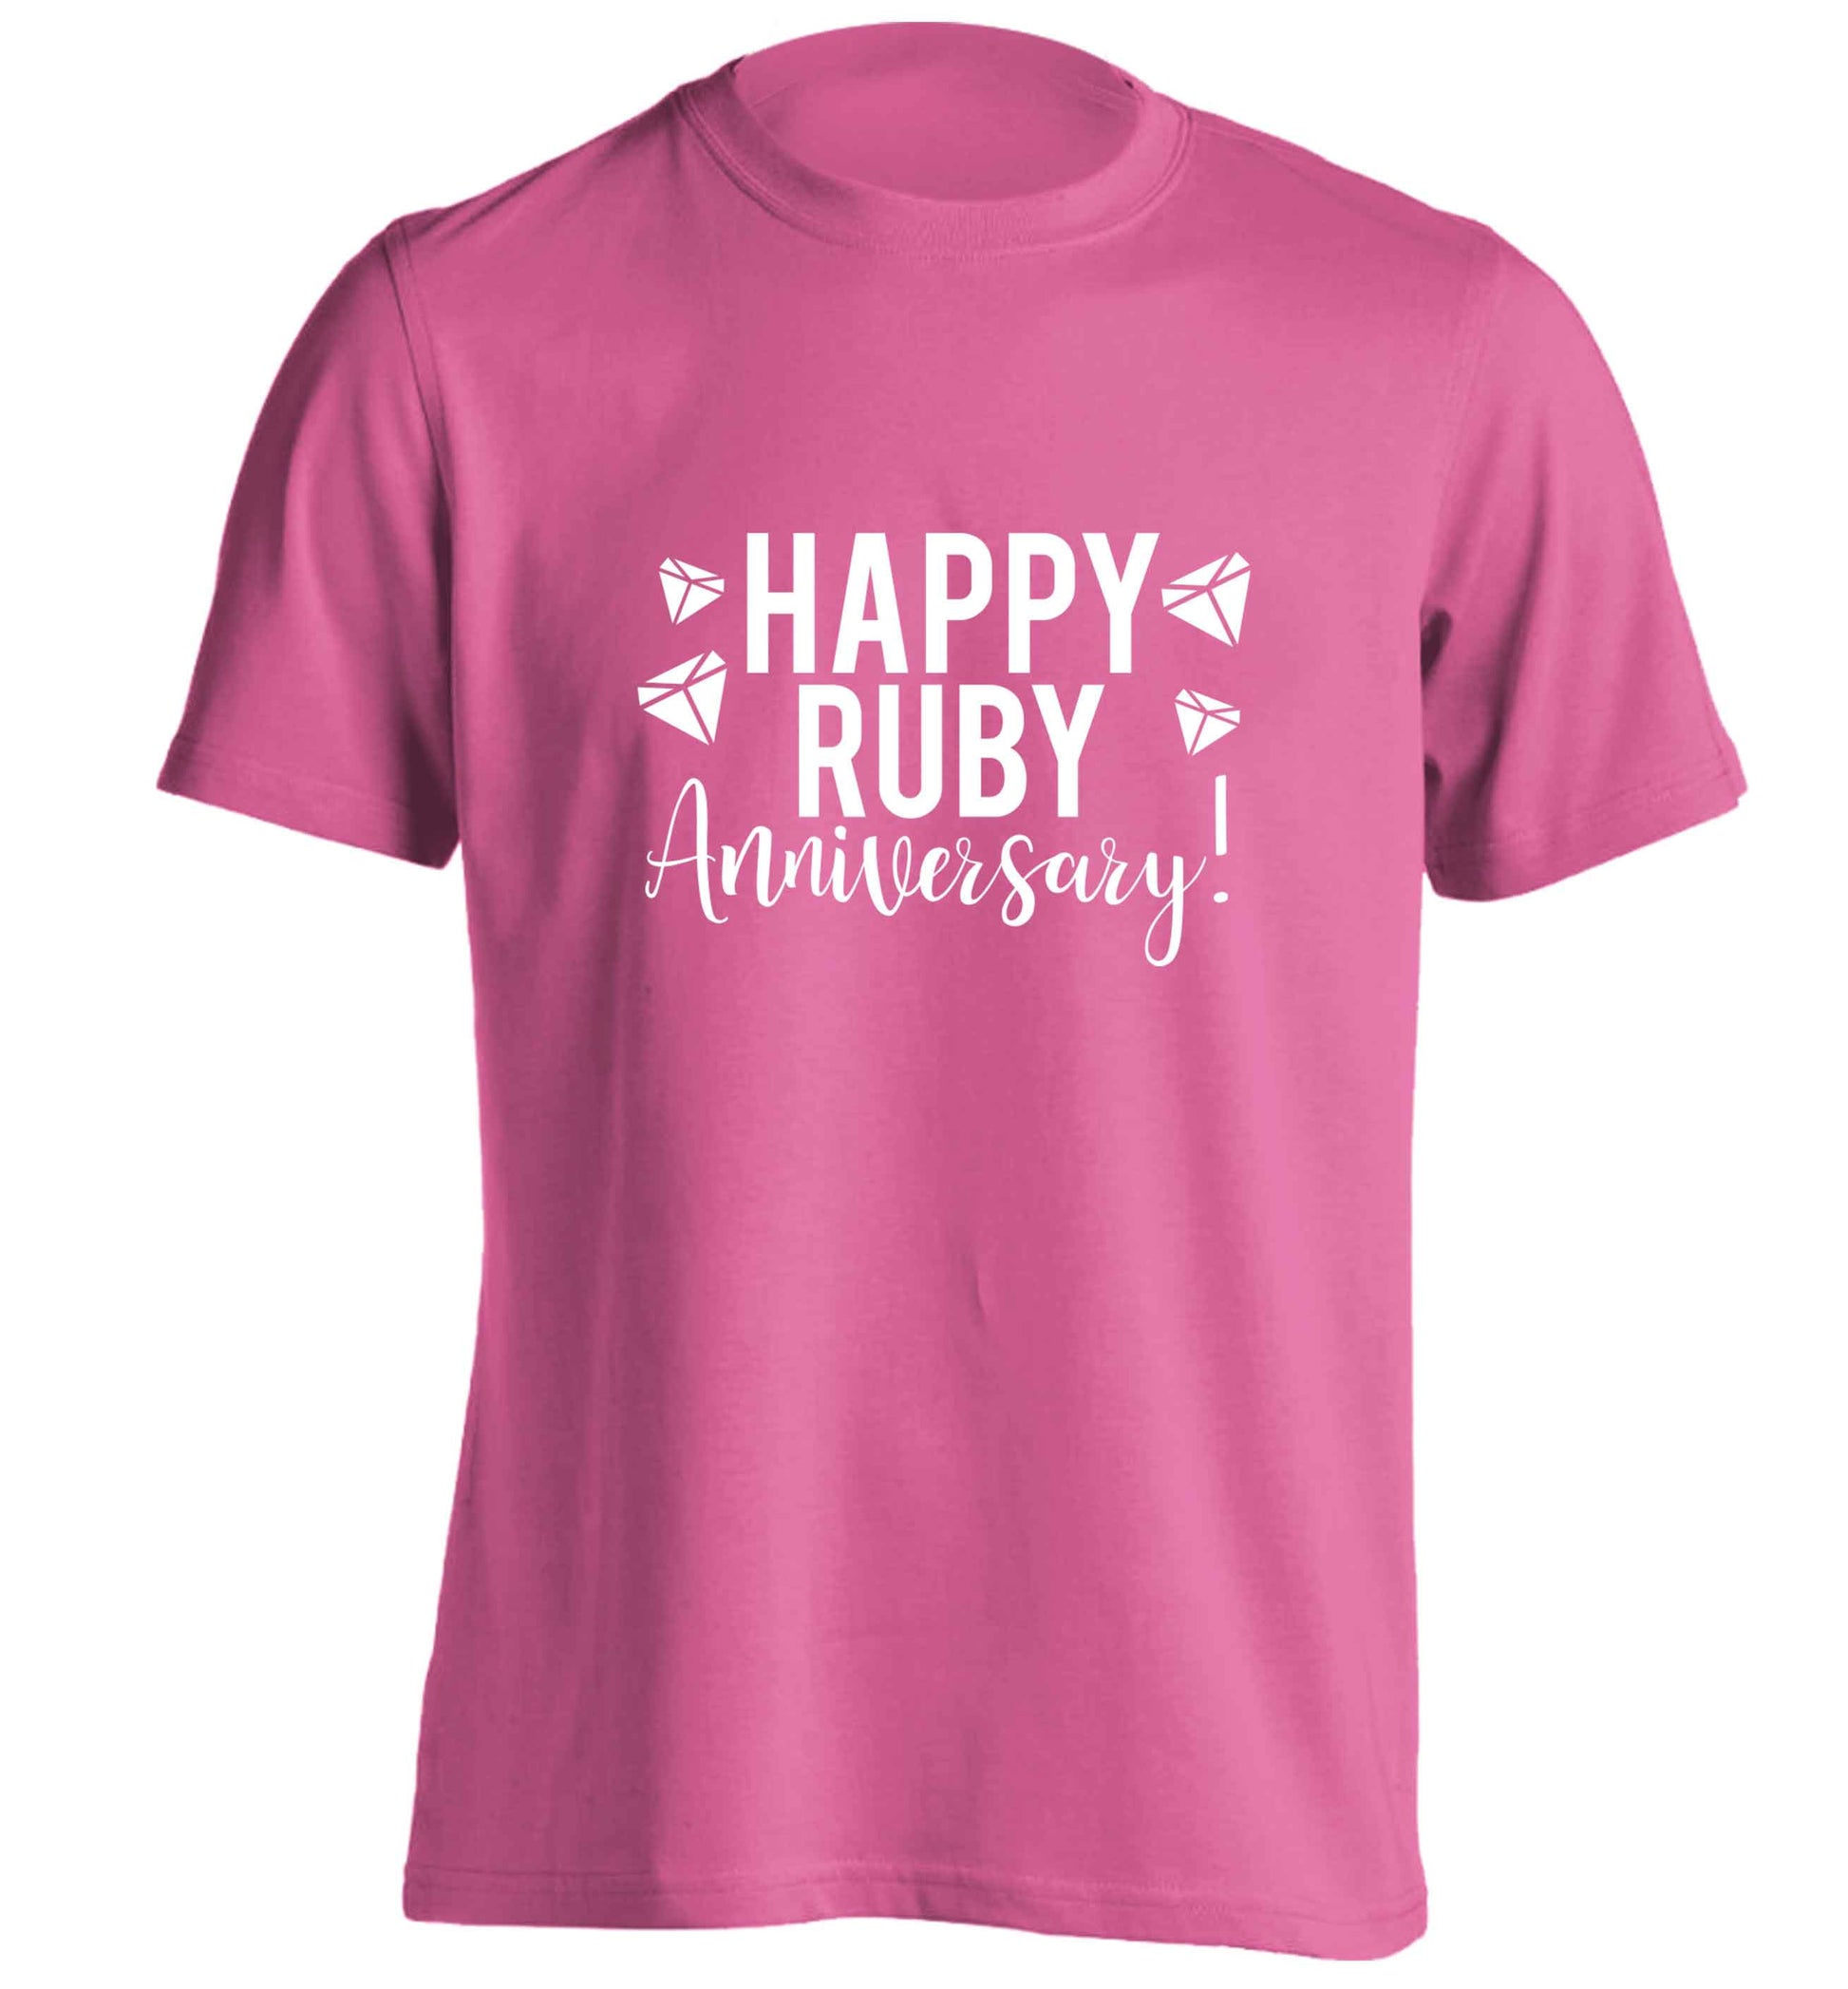 Happy ruby anniversary! adults unisex pink Tshirt 2XL